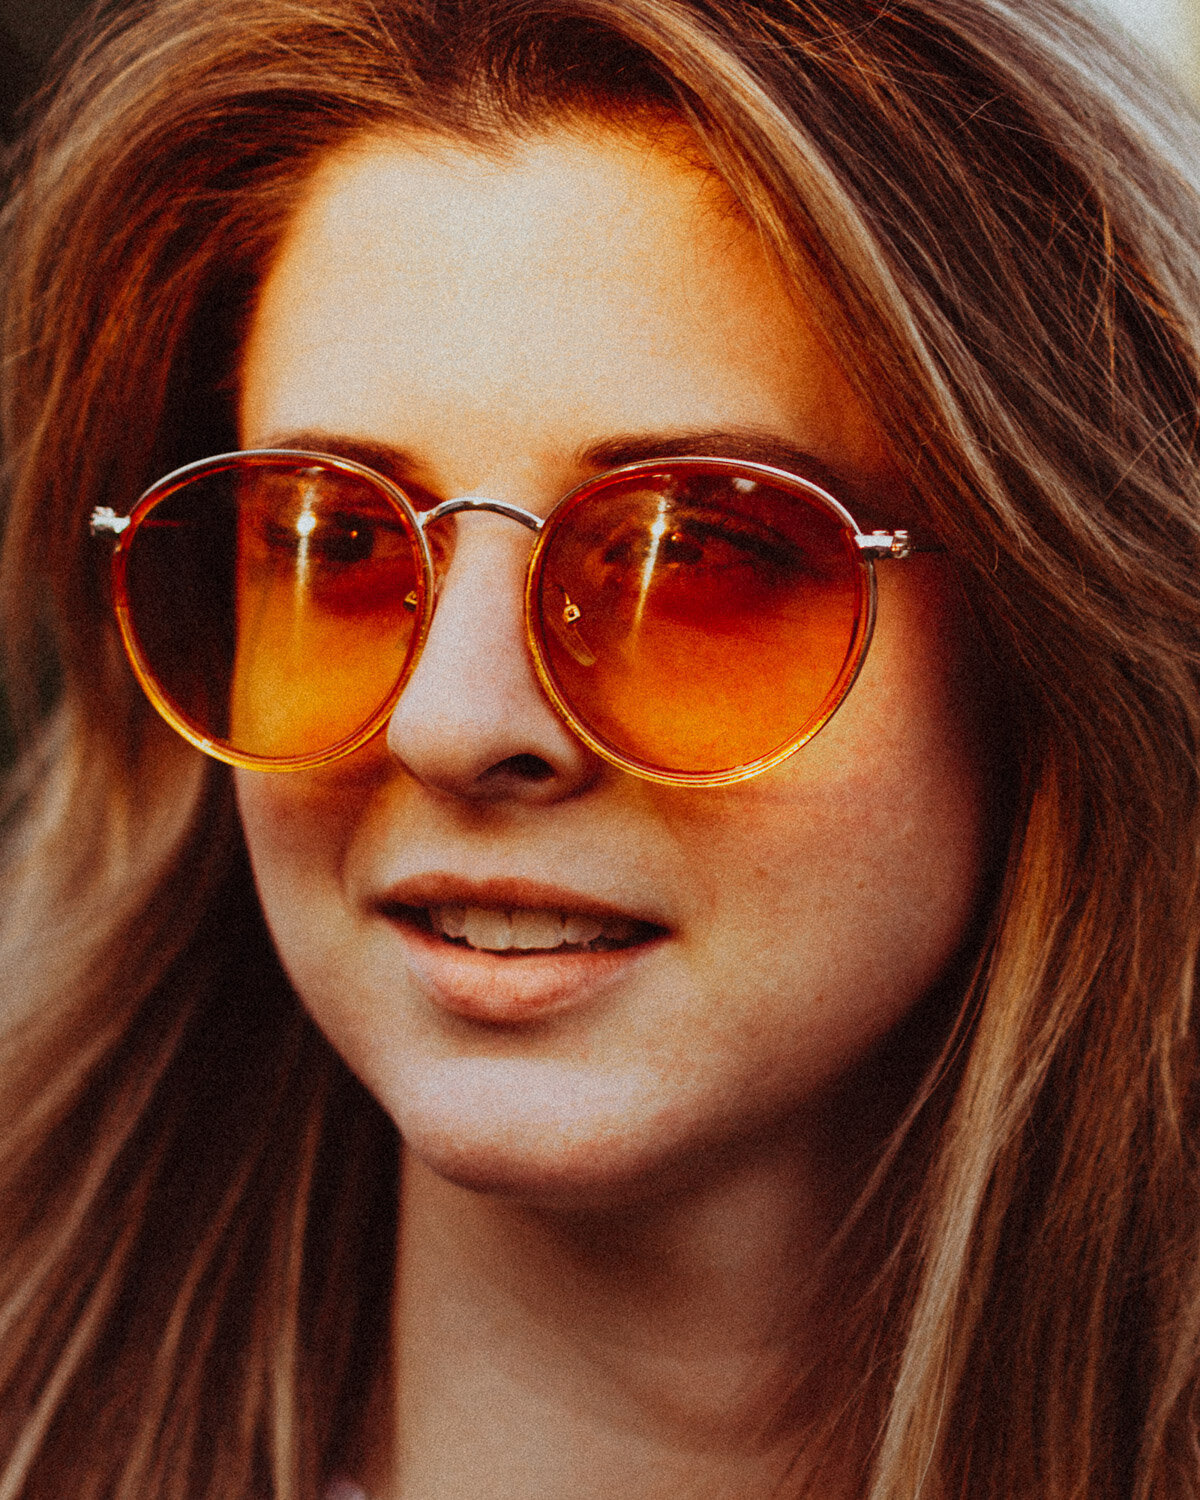 nashville-portrait-photographer-sunset-golden-sunglasses-orange